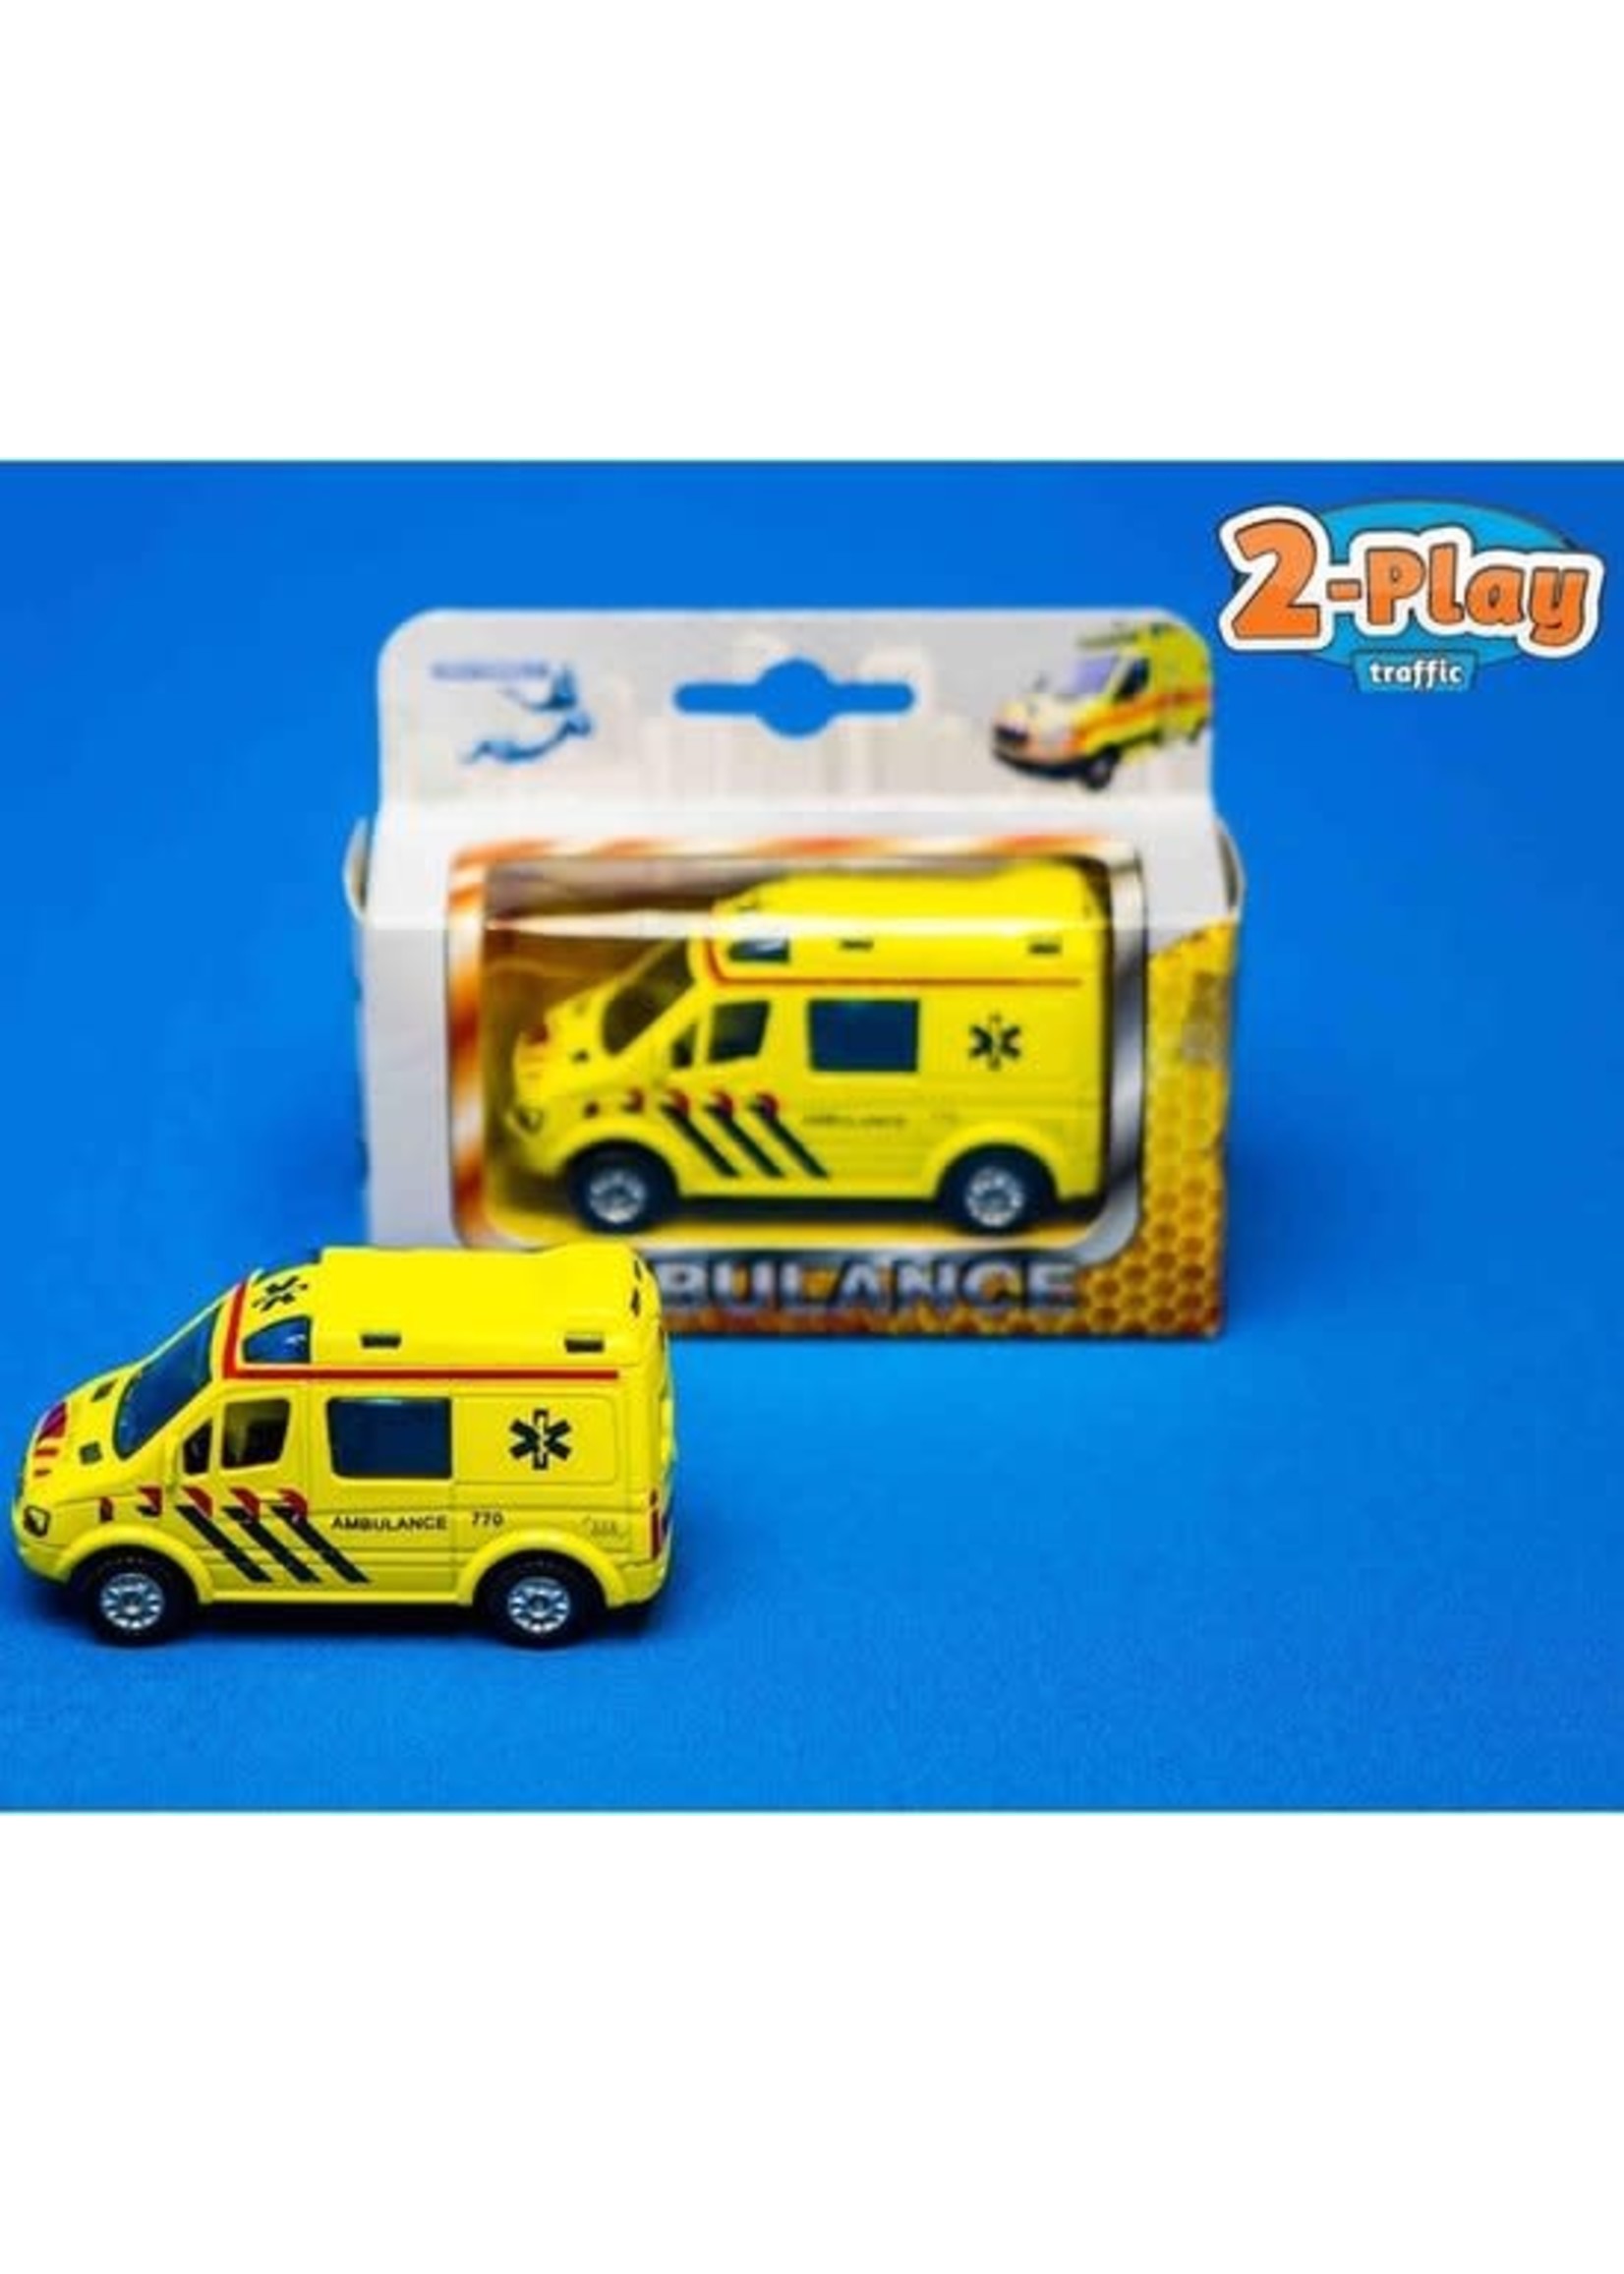 Kids Globe 2-Play Ambulance met pull-back